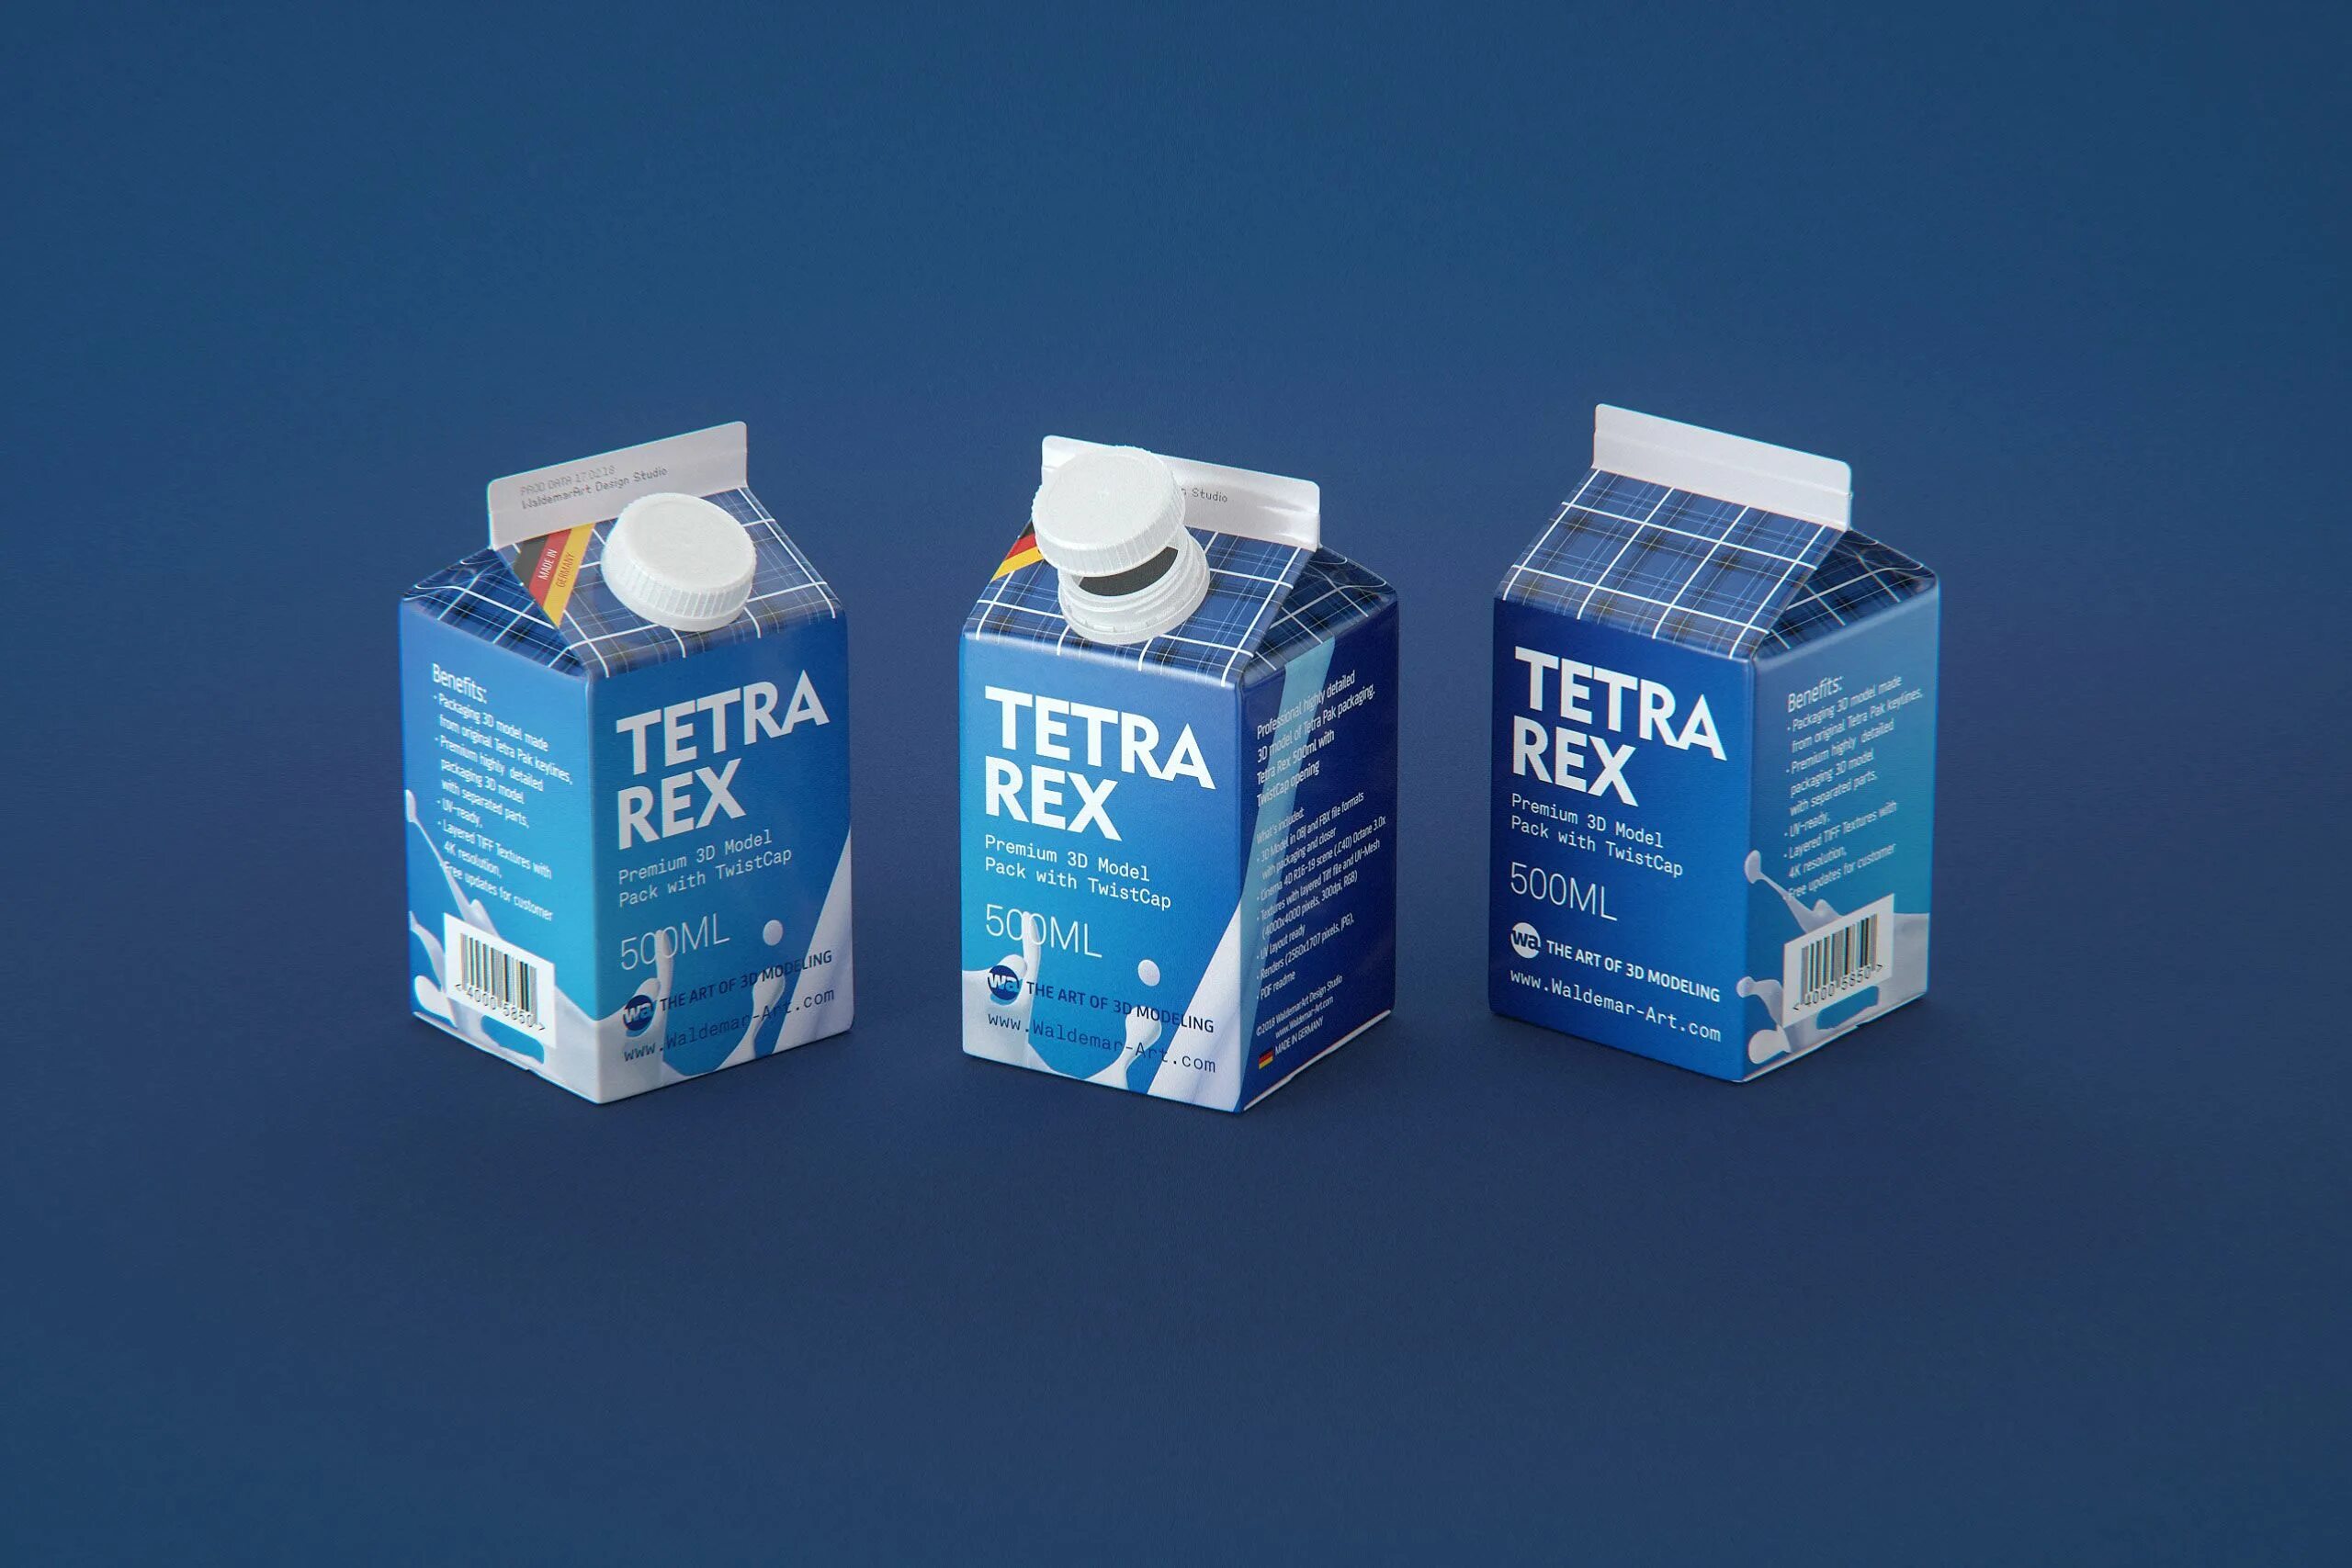 Пакеты тетра пак. Tetra Pak упаковка. Tetra Rex упаковка. Тетра пак Tetra Pack. Упаковка тетра пак для молока.